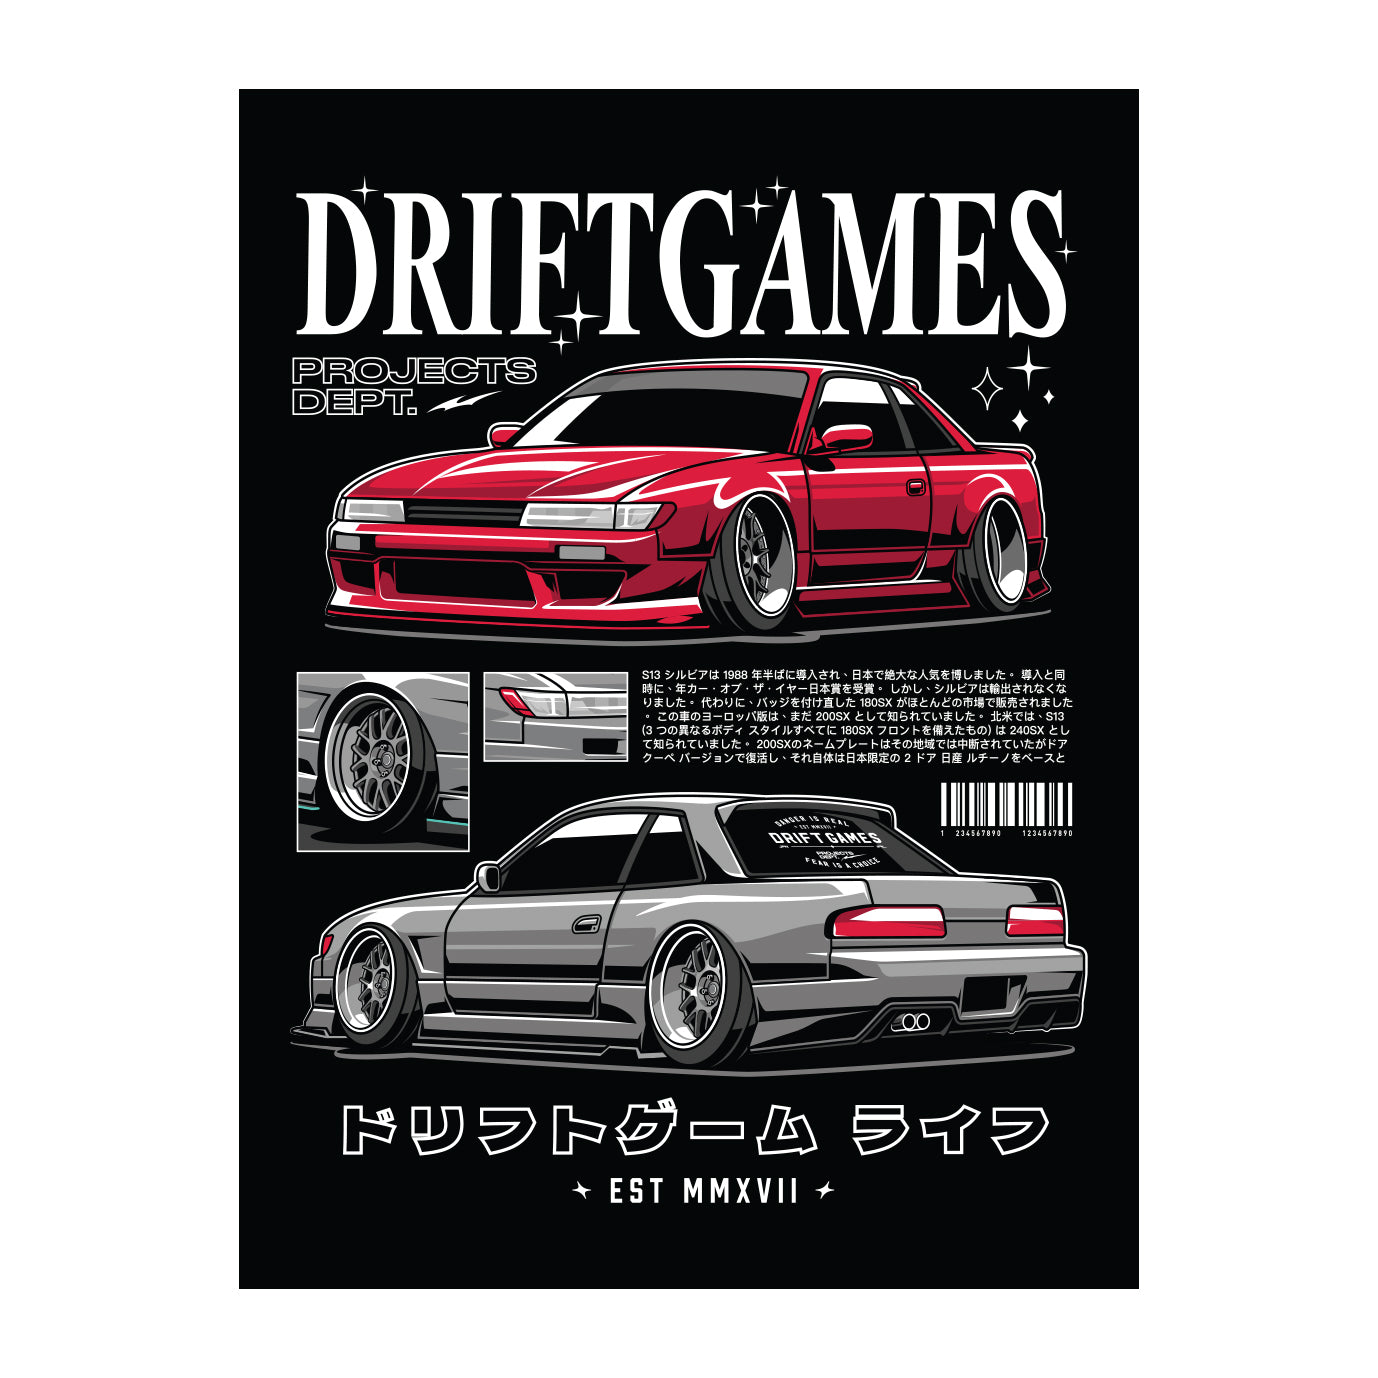 Repuestos – Drift Gaming Store